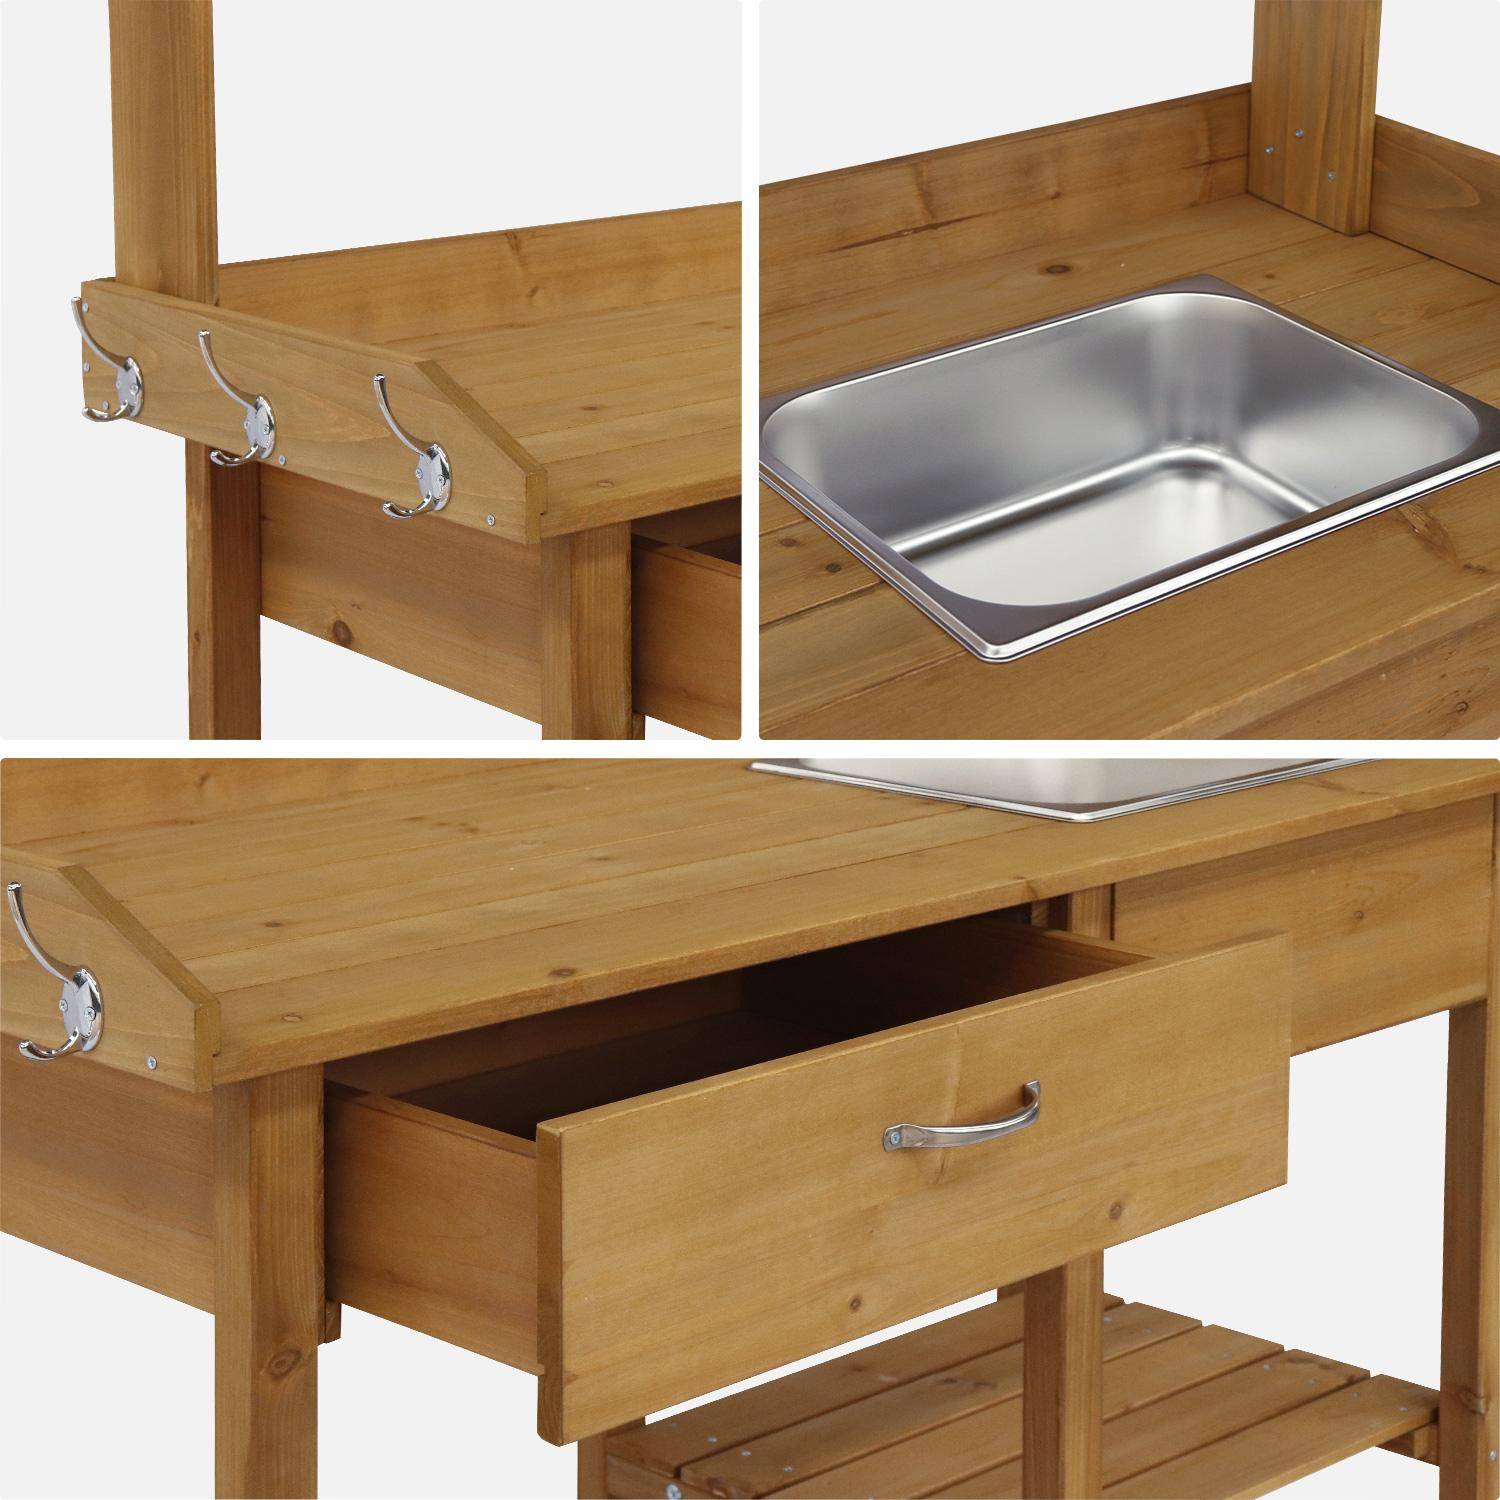 Capucine mesa de madera para macetas, 1 cajón, 2 estantes, 1 fregadero, ganchos,sweeek,Photo5